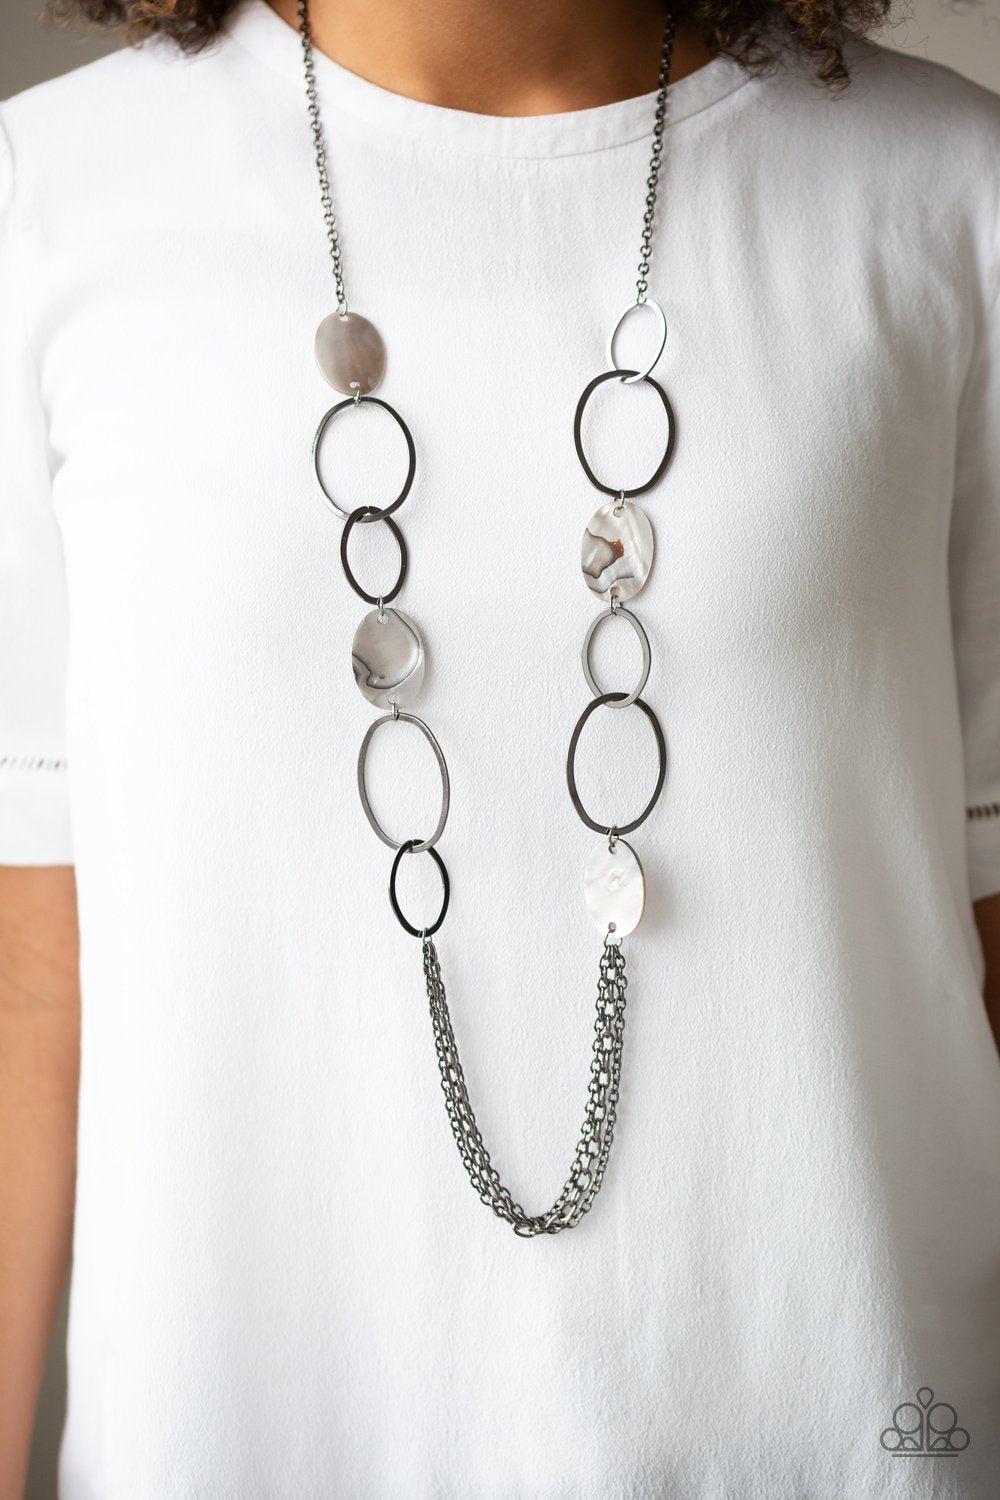 Kaleidoscope Coasts Black Necklace - Paparazzi Accessories - model -CarasShop.com - $5 Jewelry by Cara Jewels